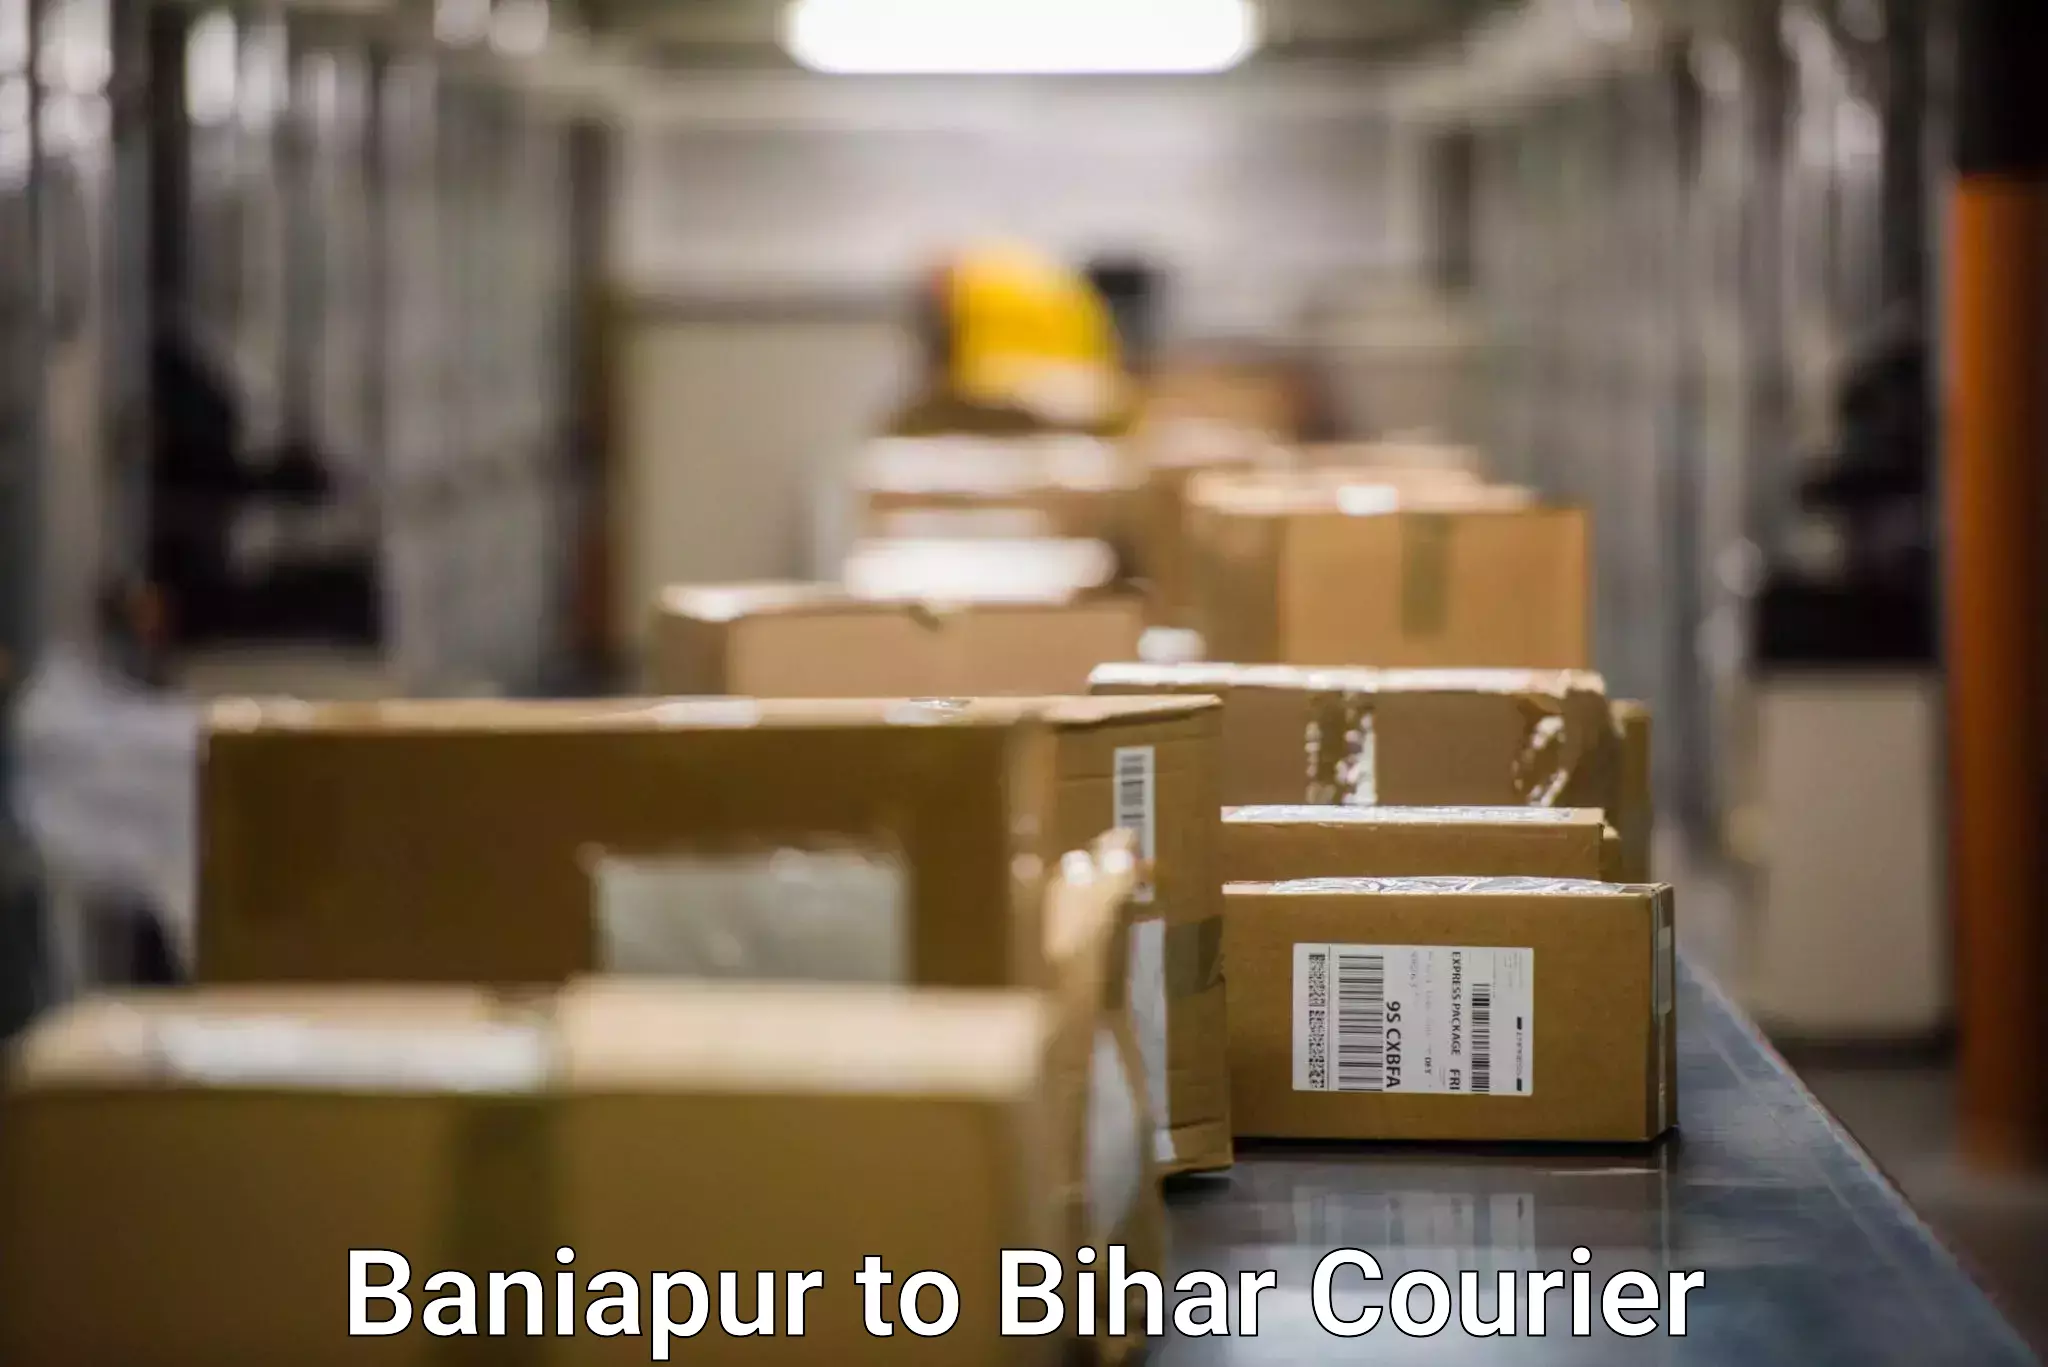 Courier service booking Baniapur to Bihar